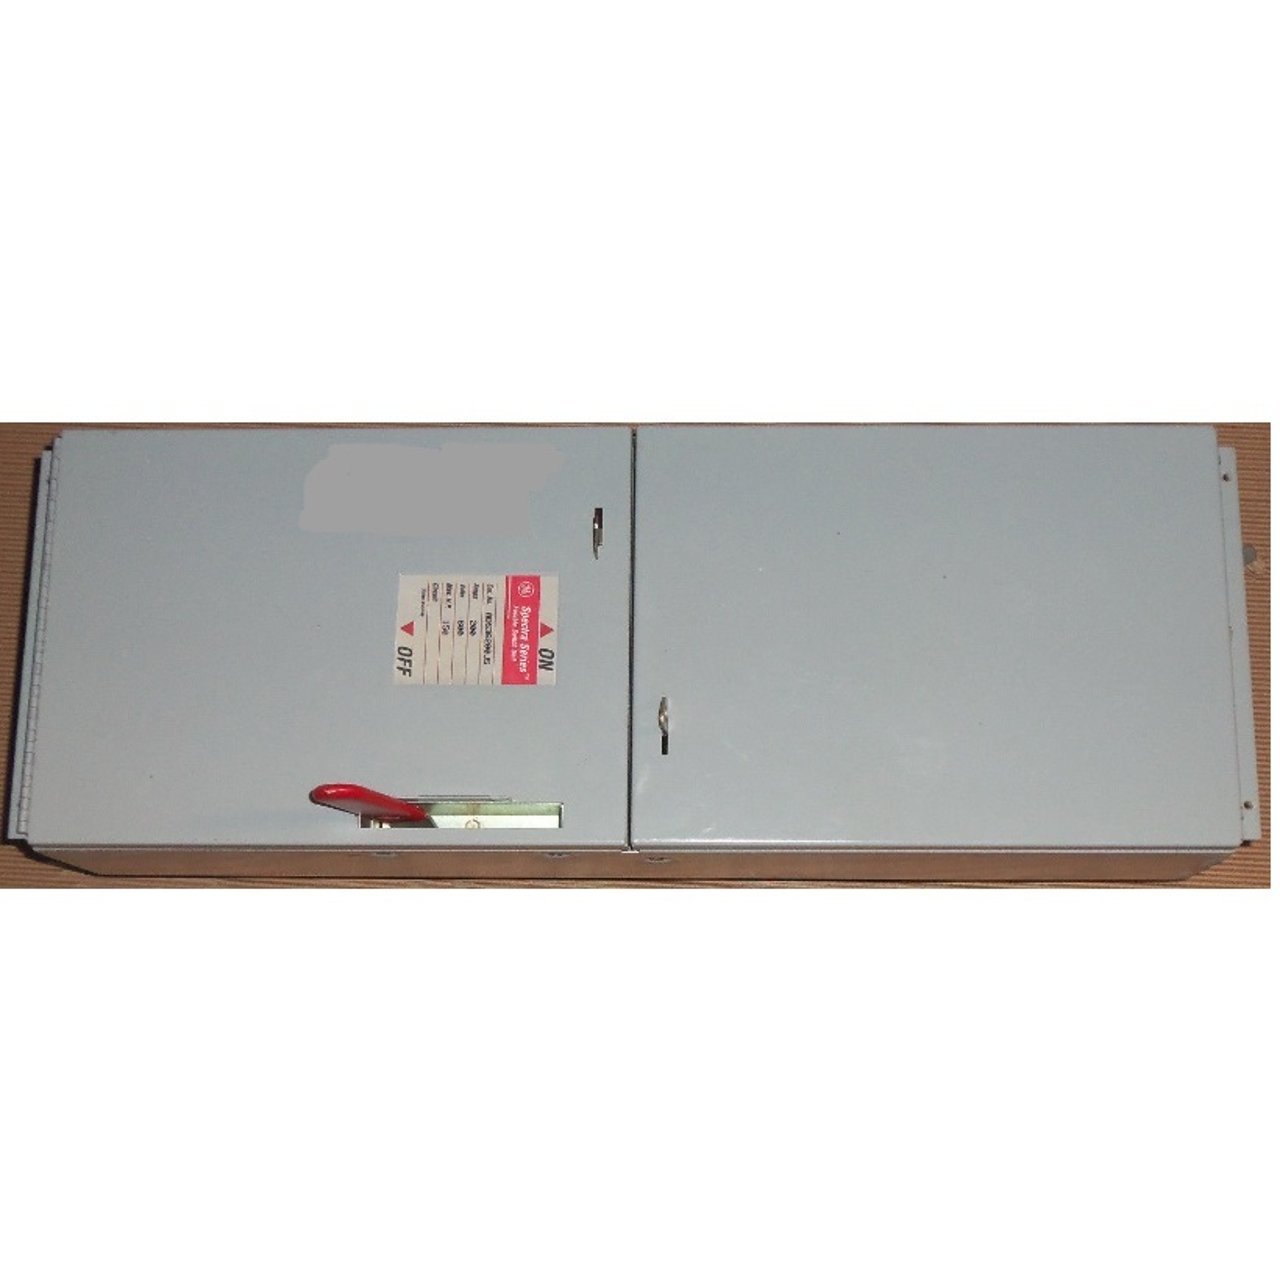 ADS36800LBFP - General Electrics - Panel Switch